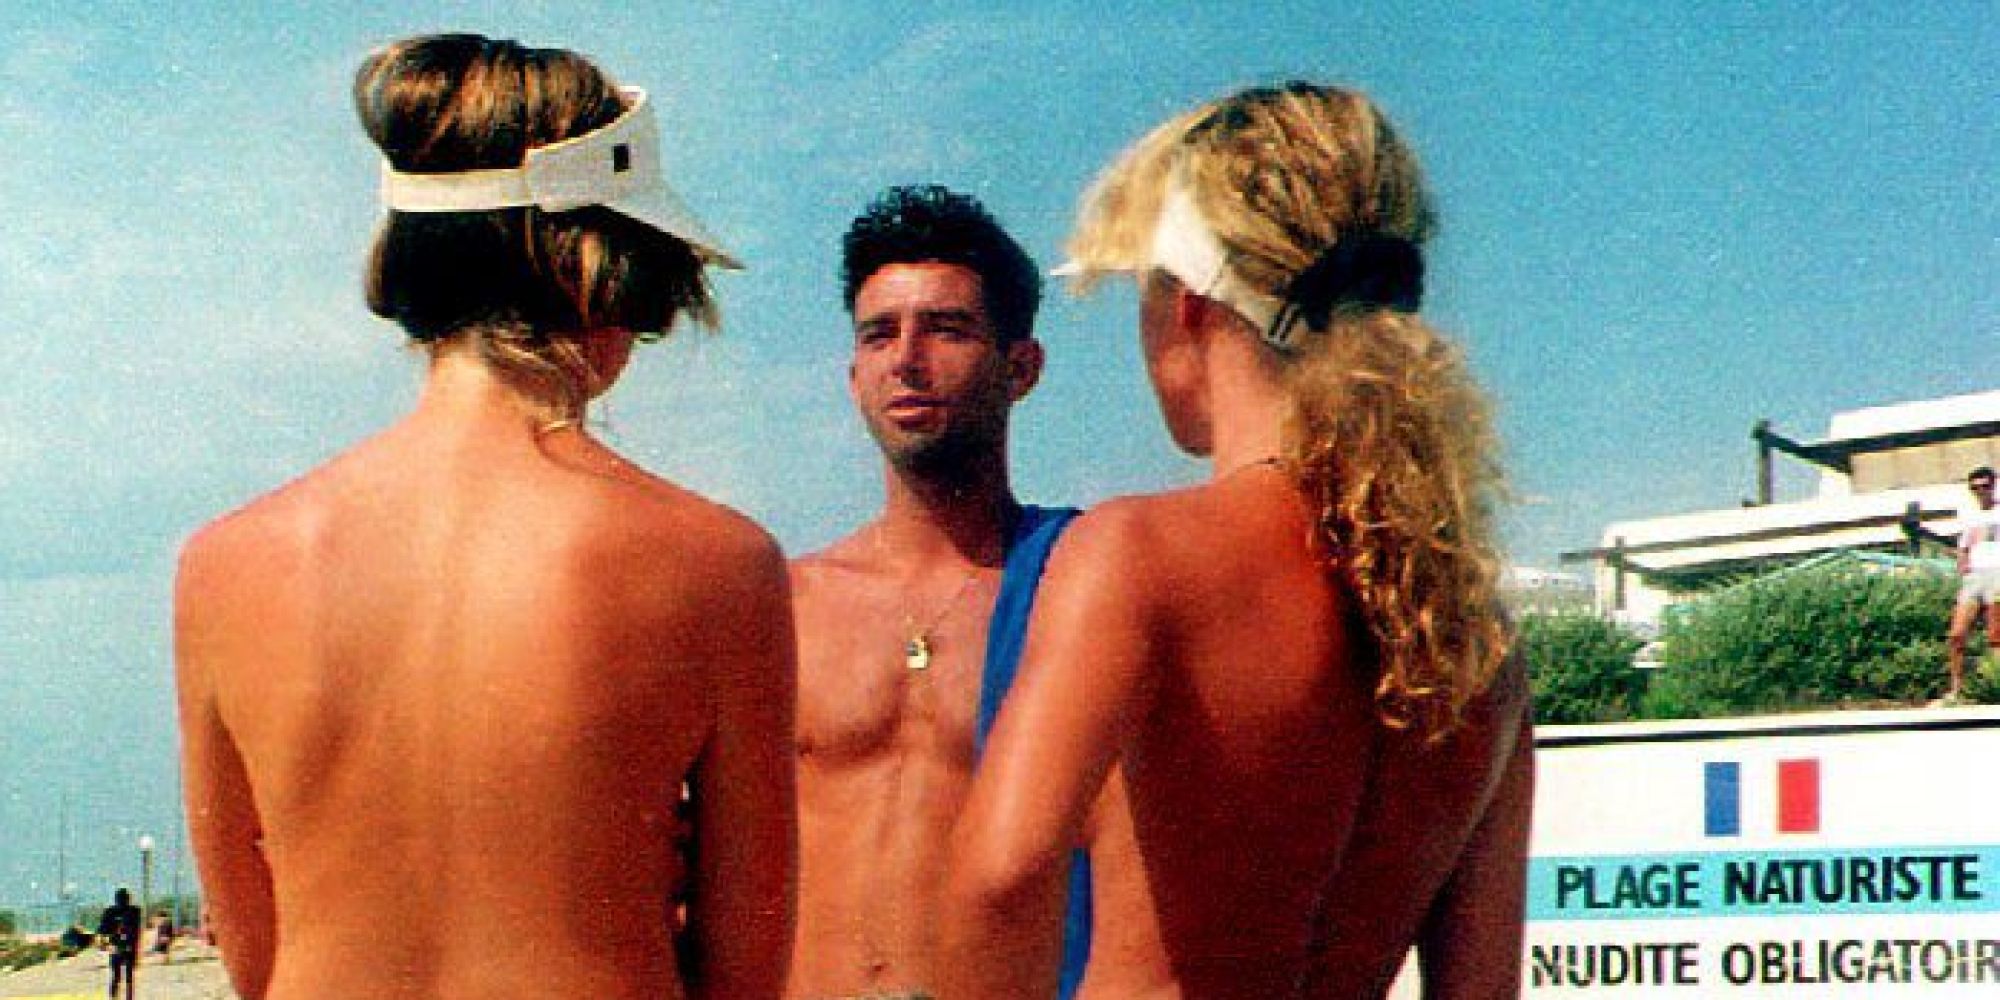 Free French Nudist - Think, beach naturist naturiste nudist are